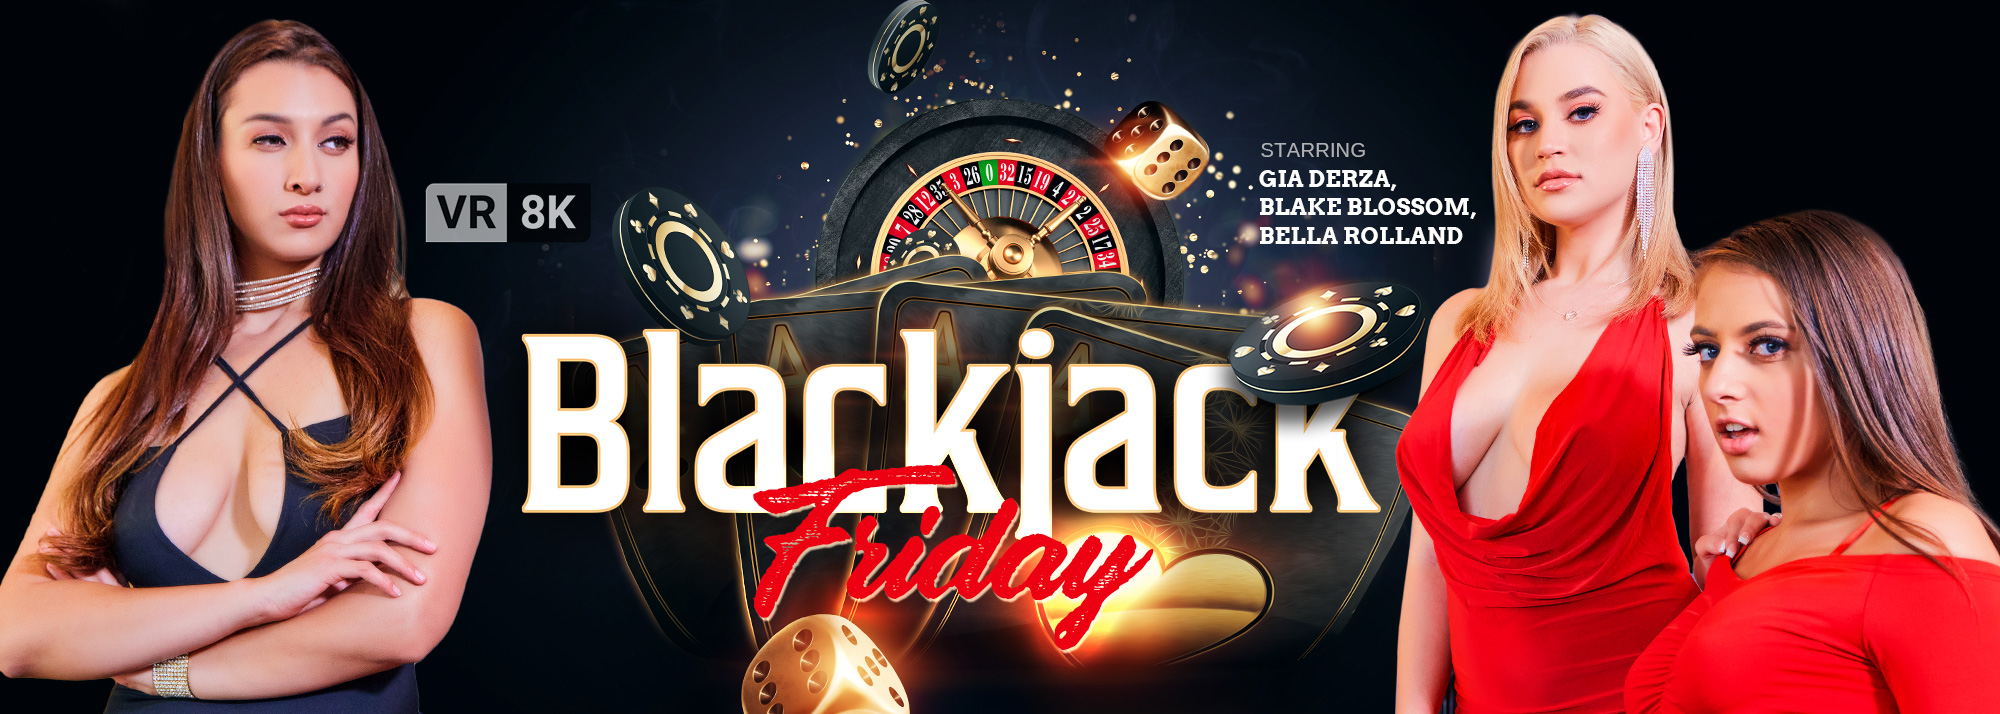 Blackjack Friday - VR Porn Video, Starring: Blake Blossom, Bella Rolland, Gia Derza